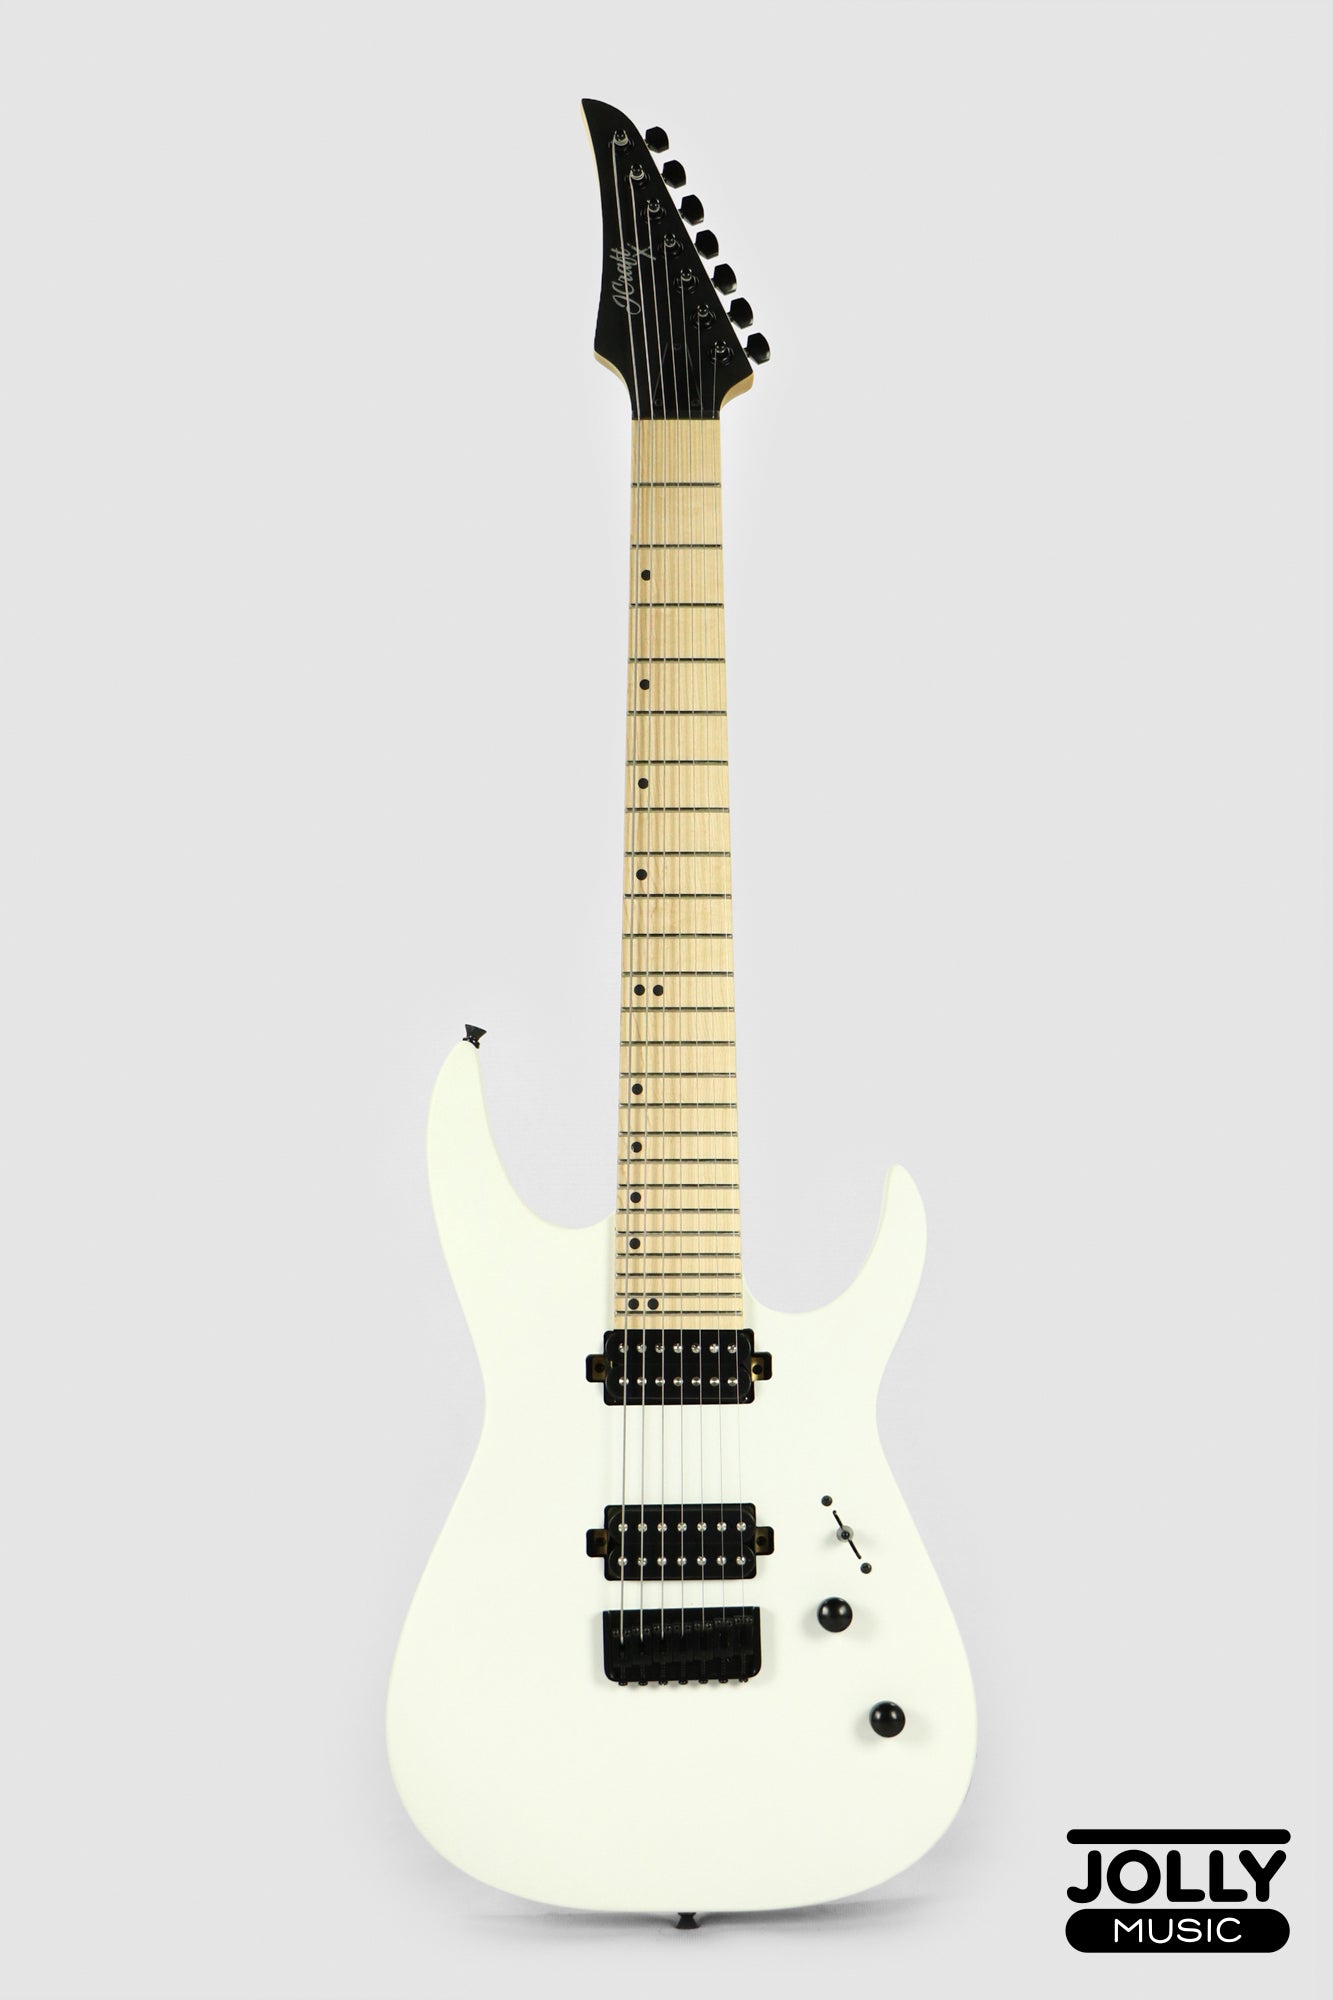 JCraft X Series Bushido BX7-1T 7-String Super S-Style Electric Guitar - Satin White